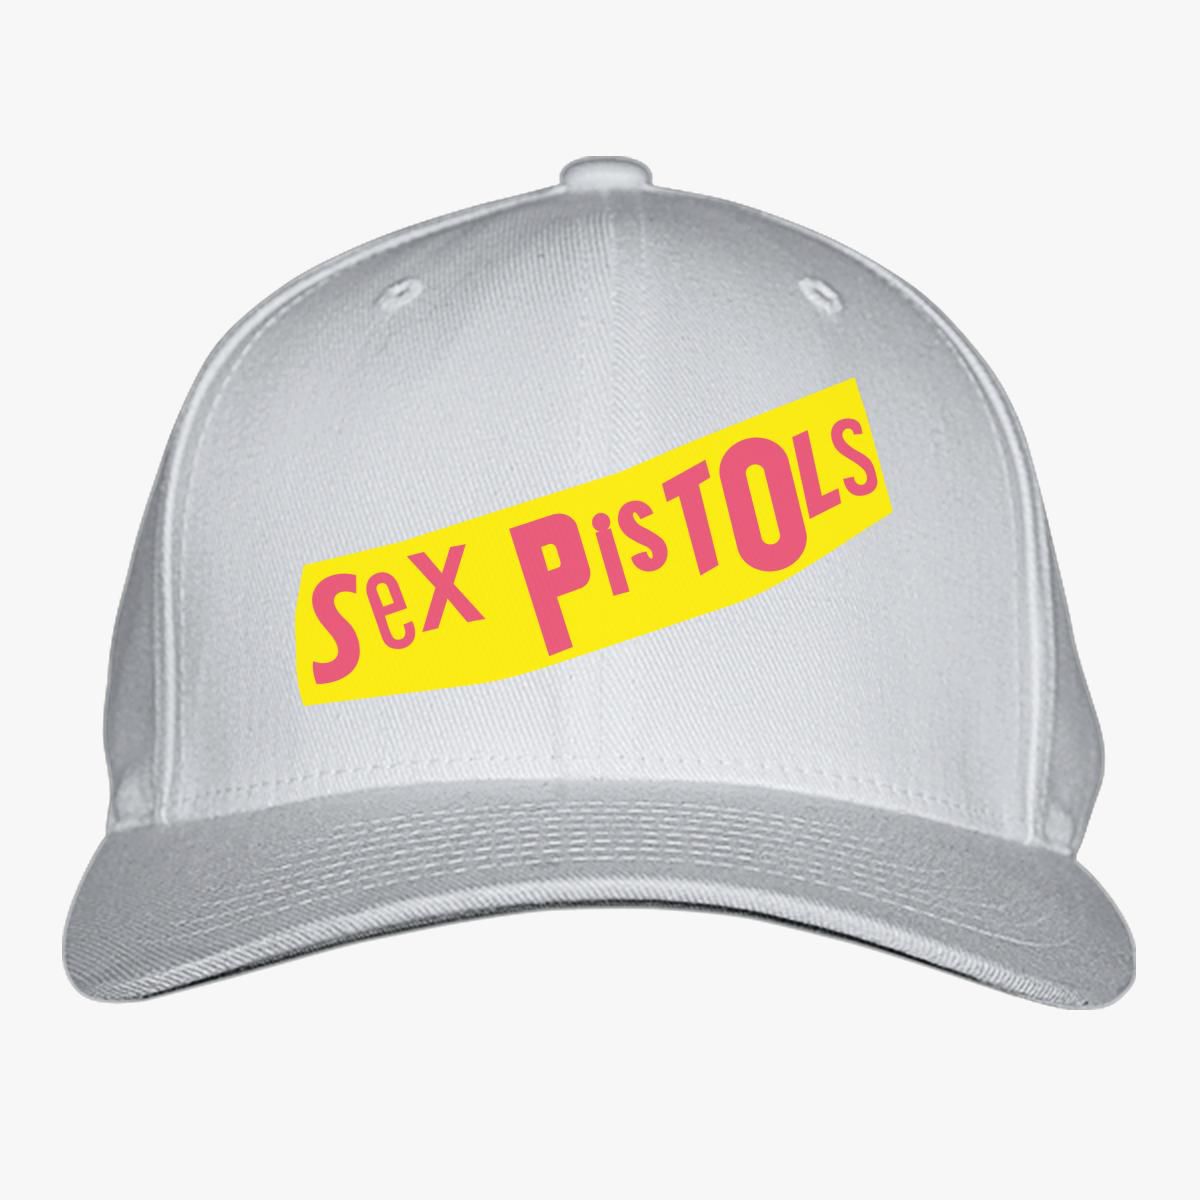 Sex Pistols Baseball Cap Embroidered Customon